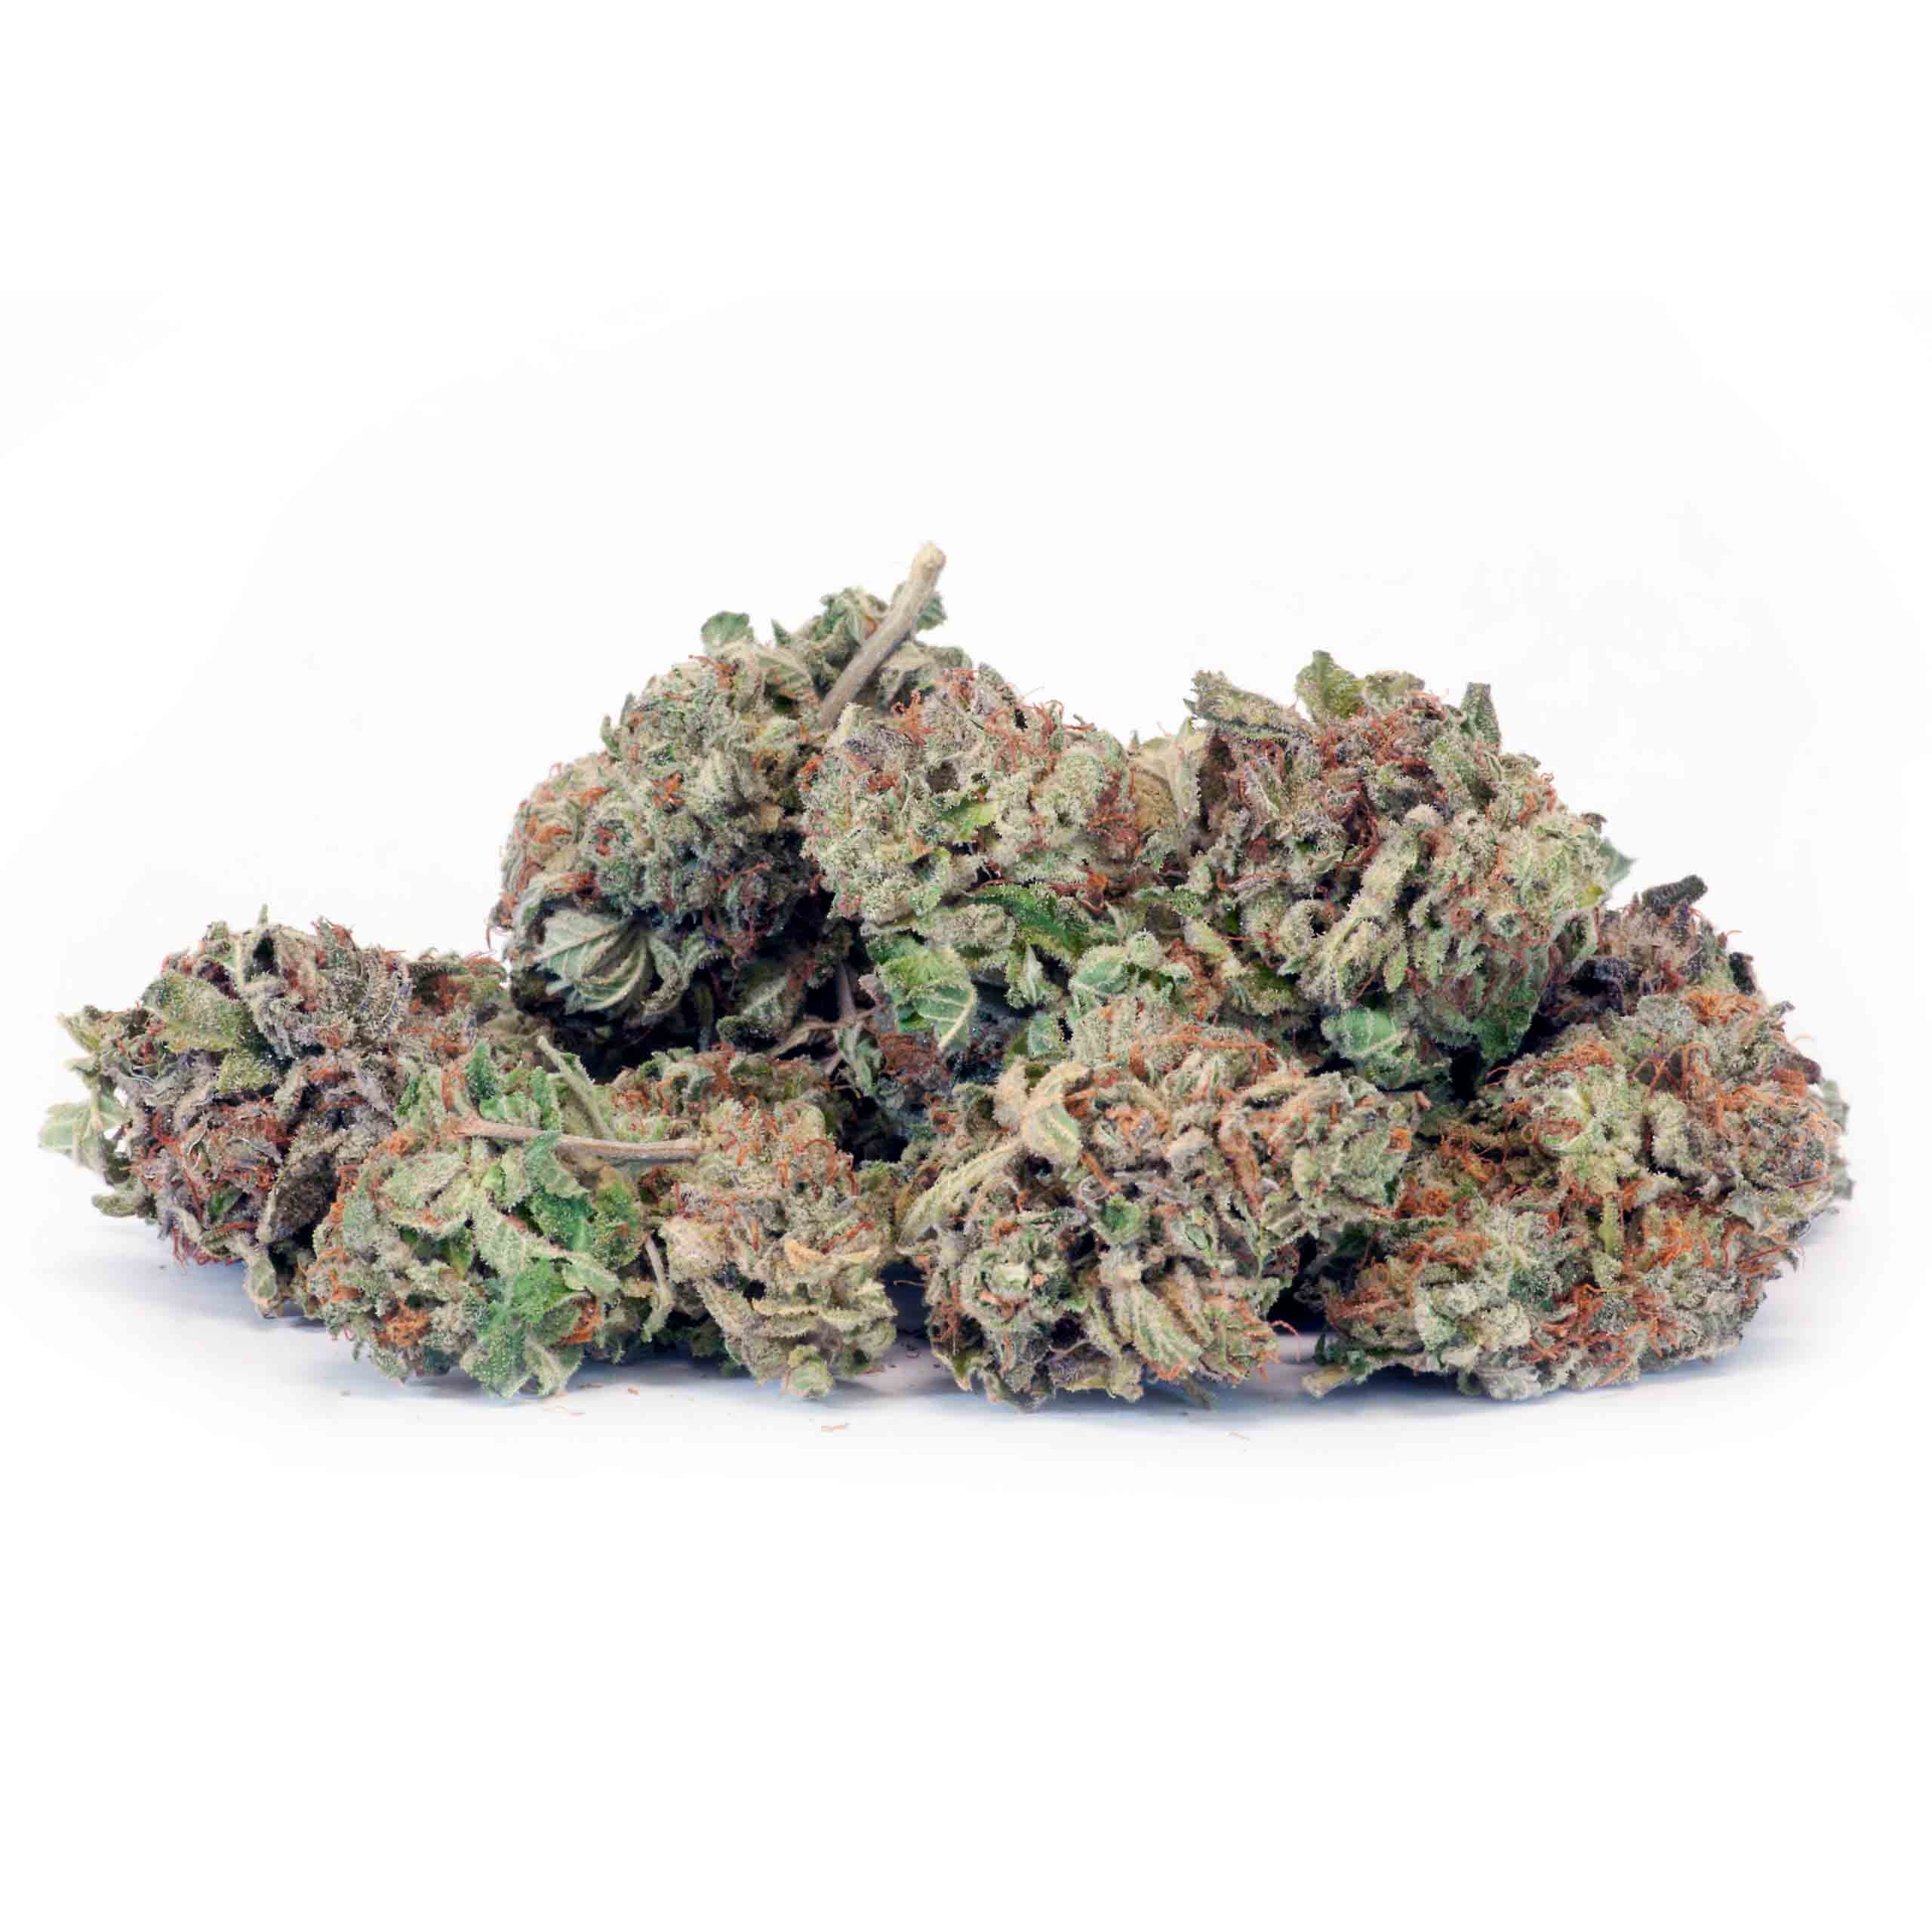 Red Congolese sativa marijuana strain nuggets from hotgrass.ca